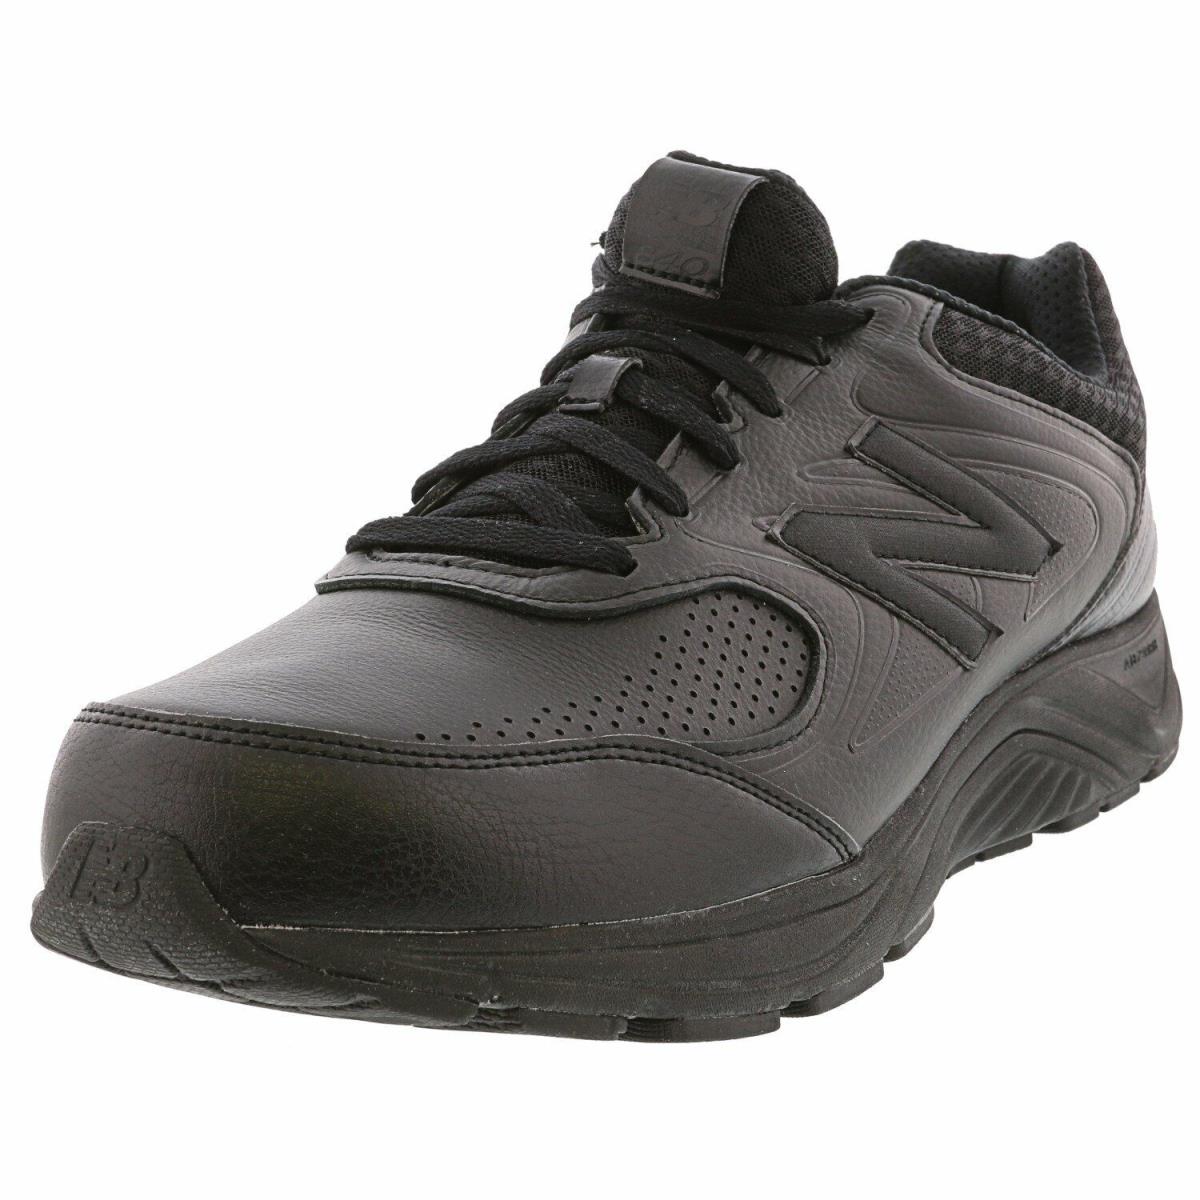 New Balance 840 Women`s Walking Shoes Black Size 7 Width B - Medium New